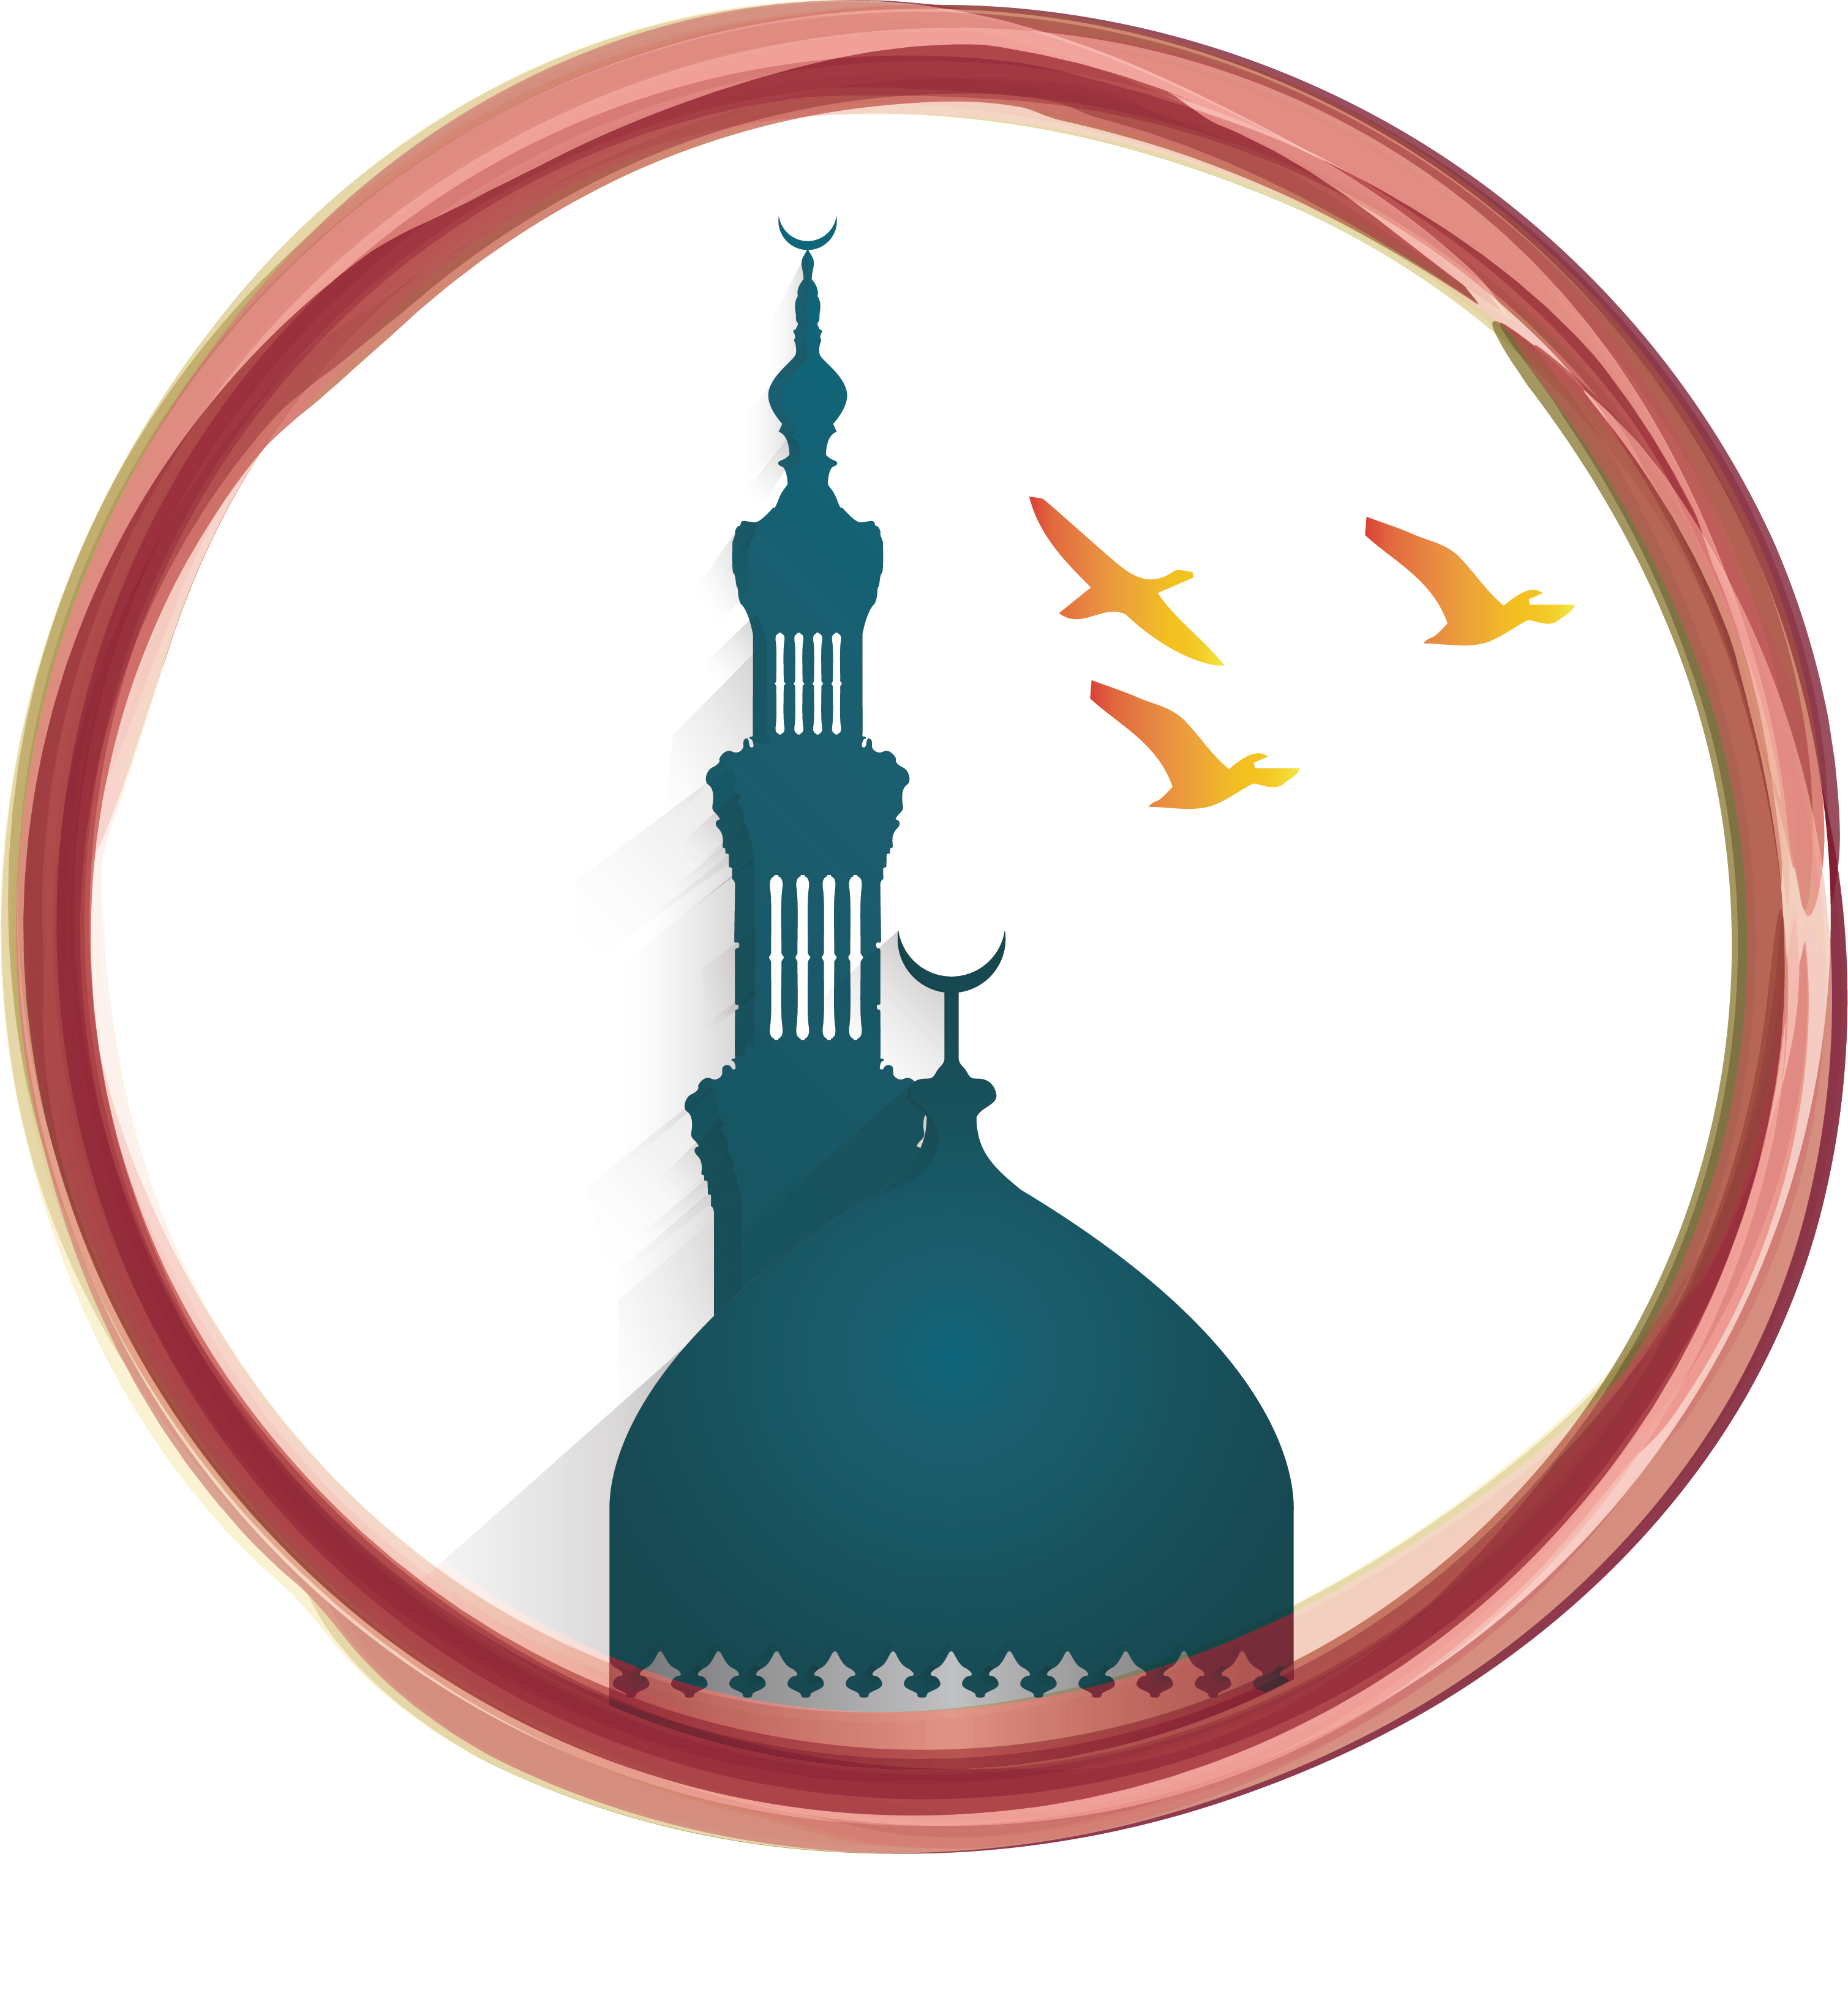 Mawlid Mubarak Prayers Poster Al-Adha Islamic Eid Clipart